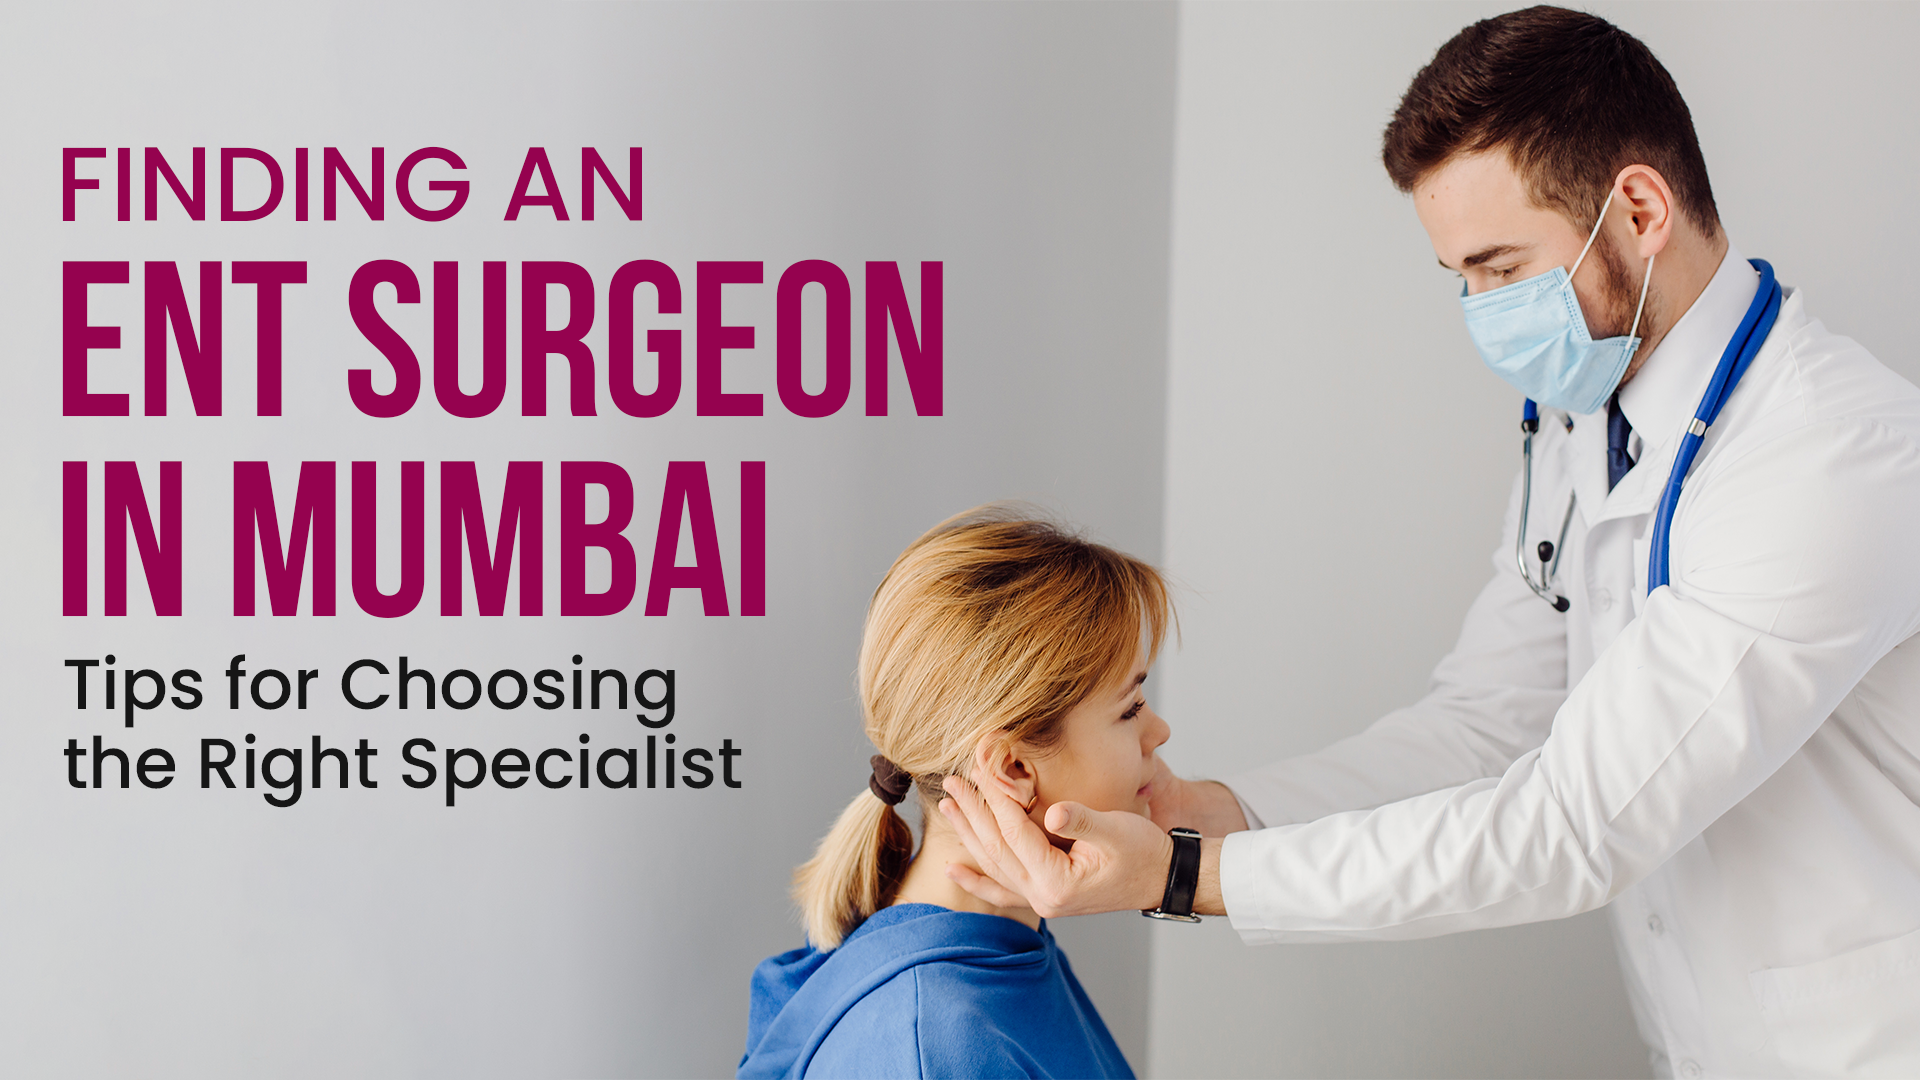 ENT surgeon in Mumbai